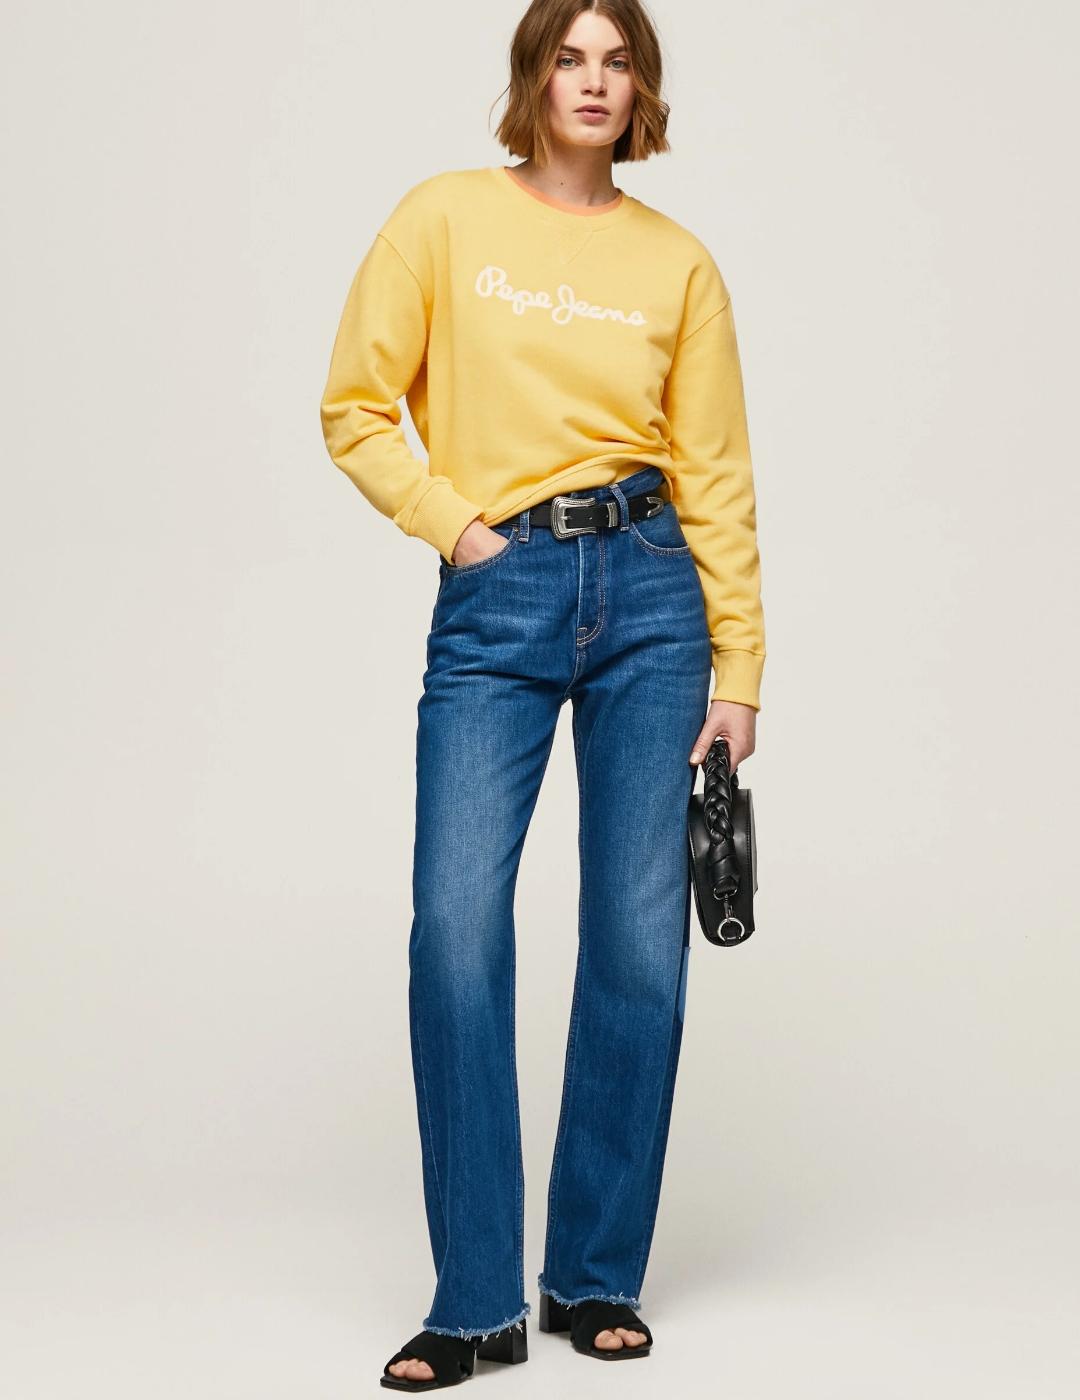 Sudadera amarilla logo estampado mujer pepe jeans